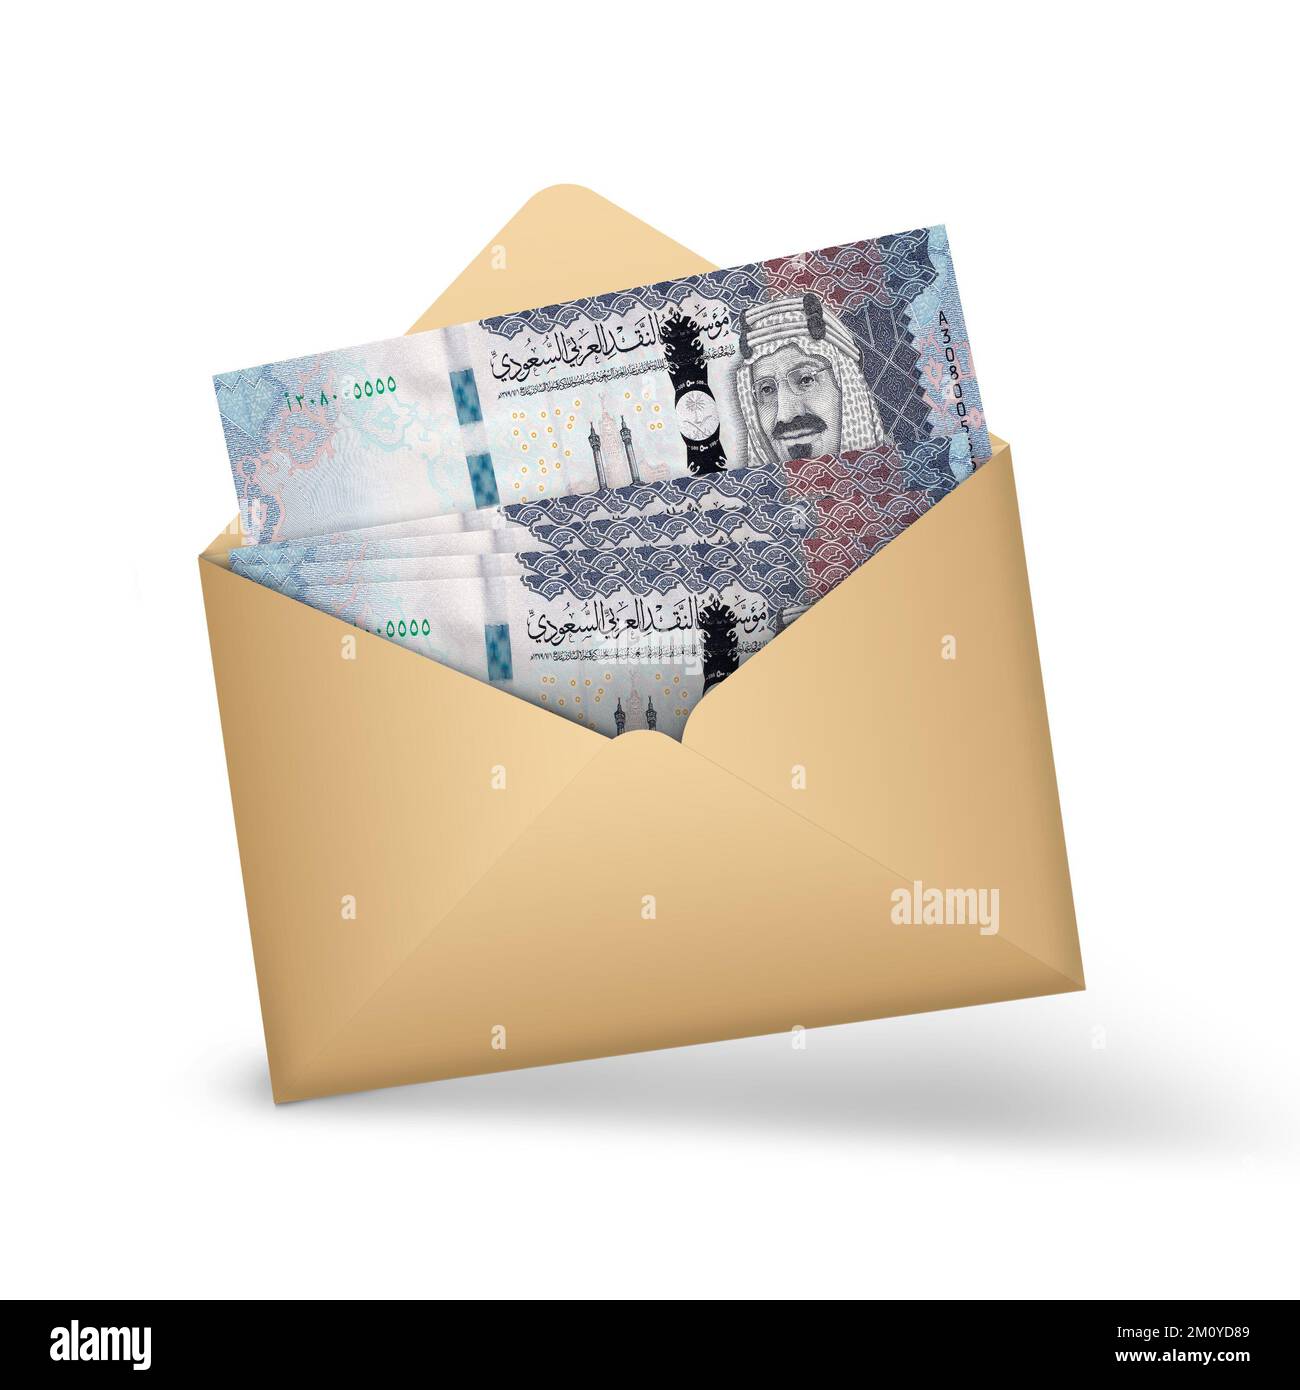 Saudi Riyal notes inside an open brown envelope. 3D illustration of money in an open envelope Stock Photo